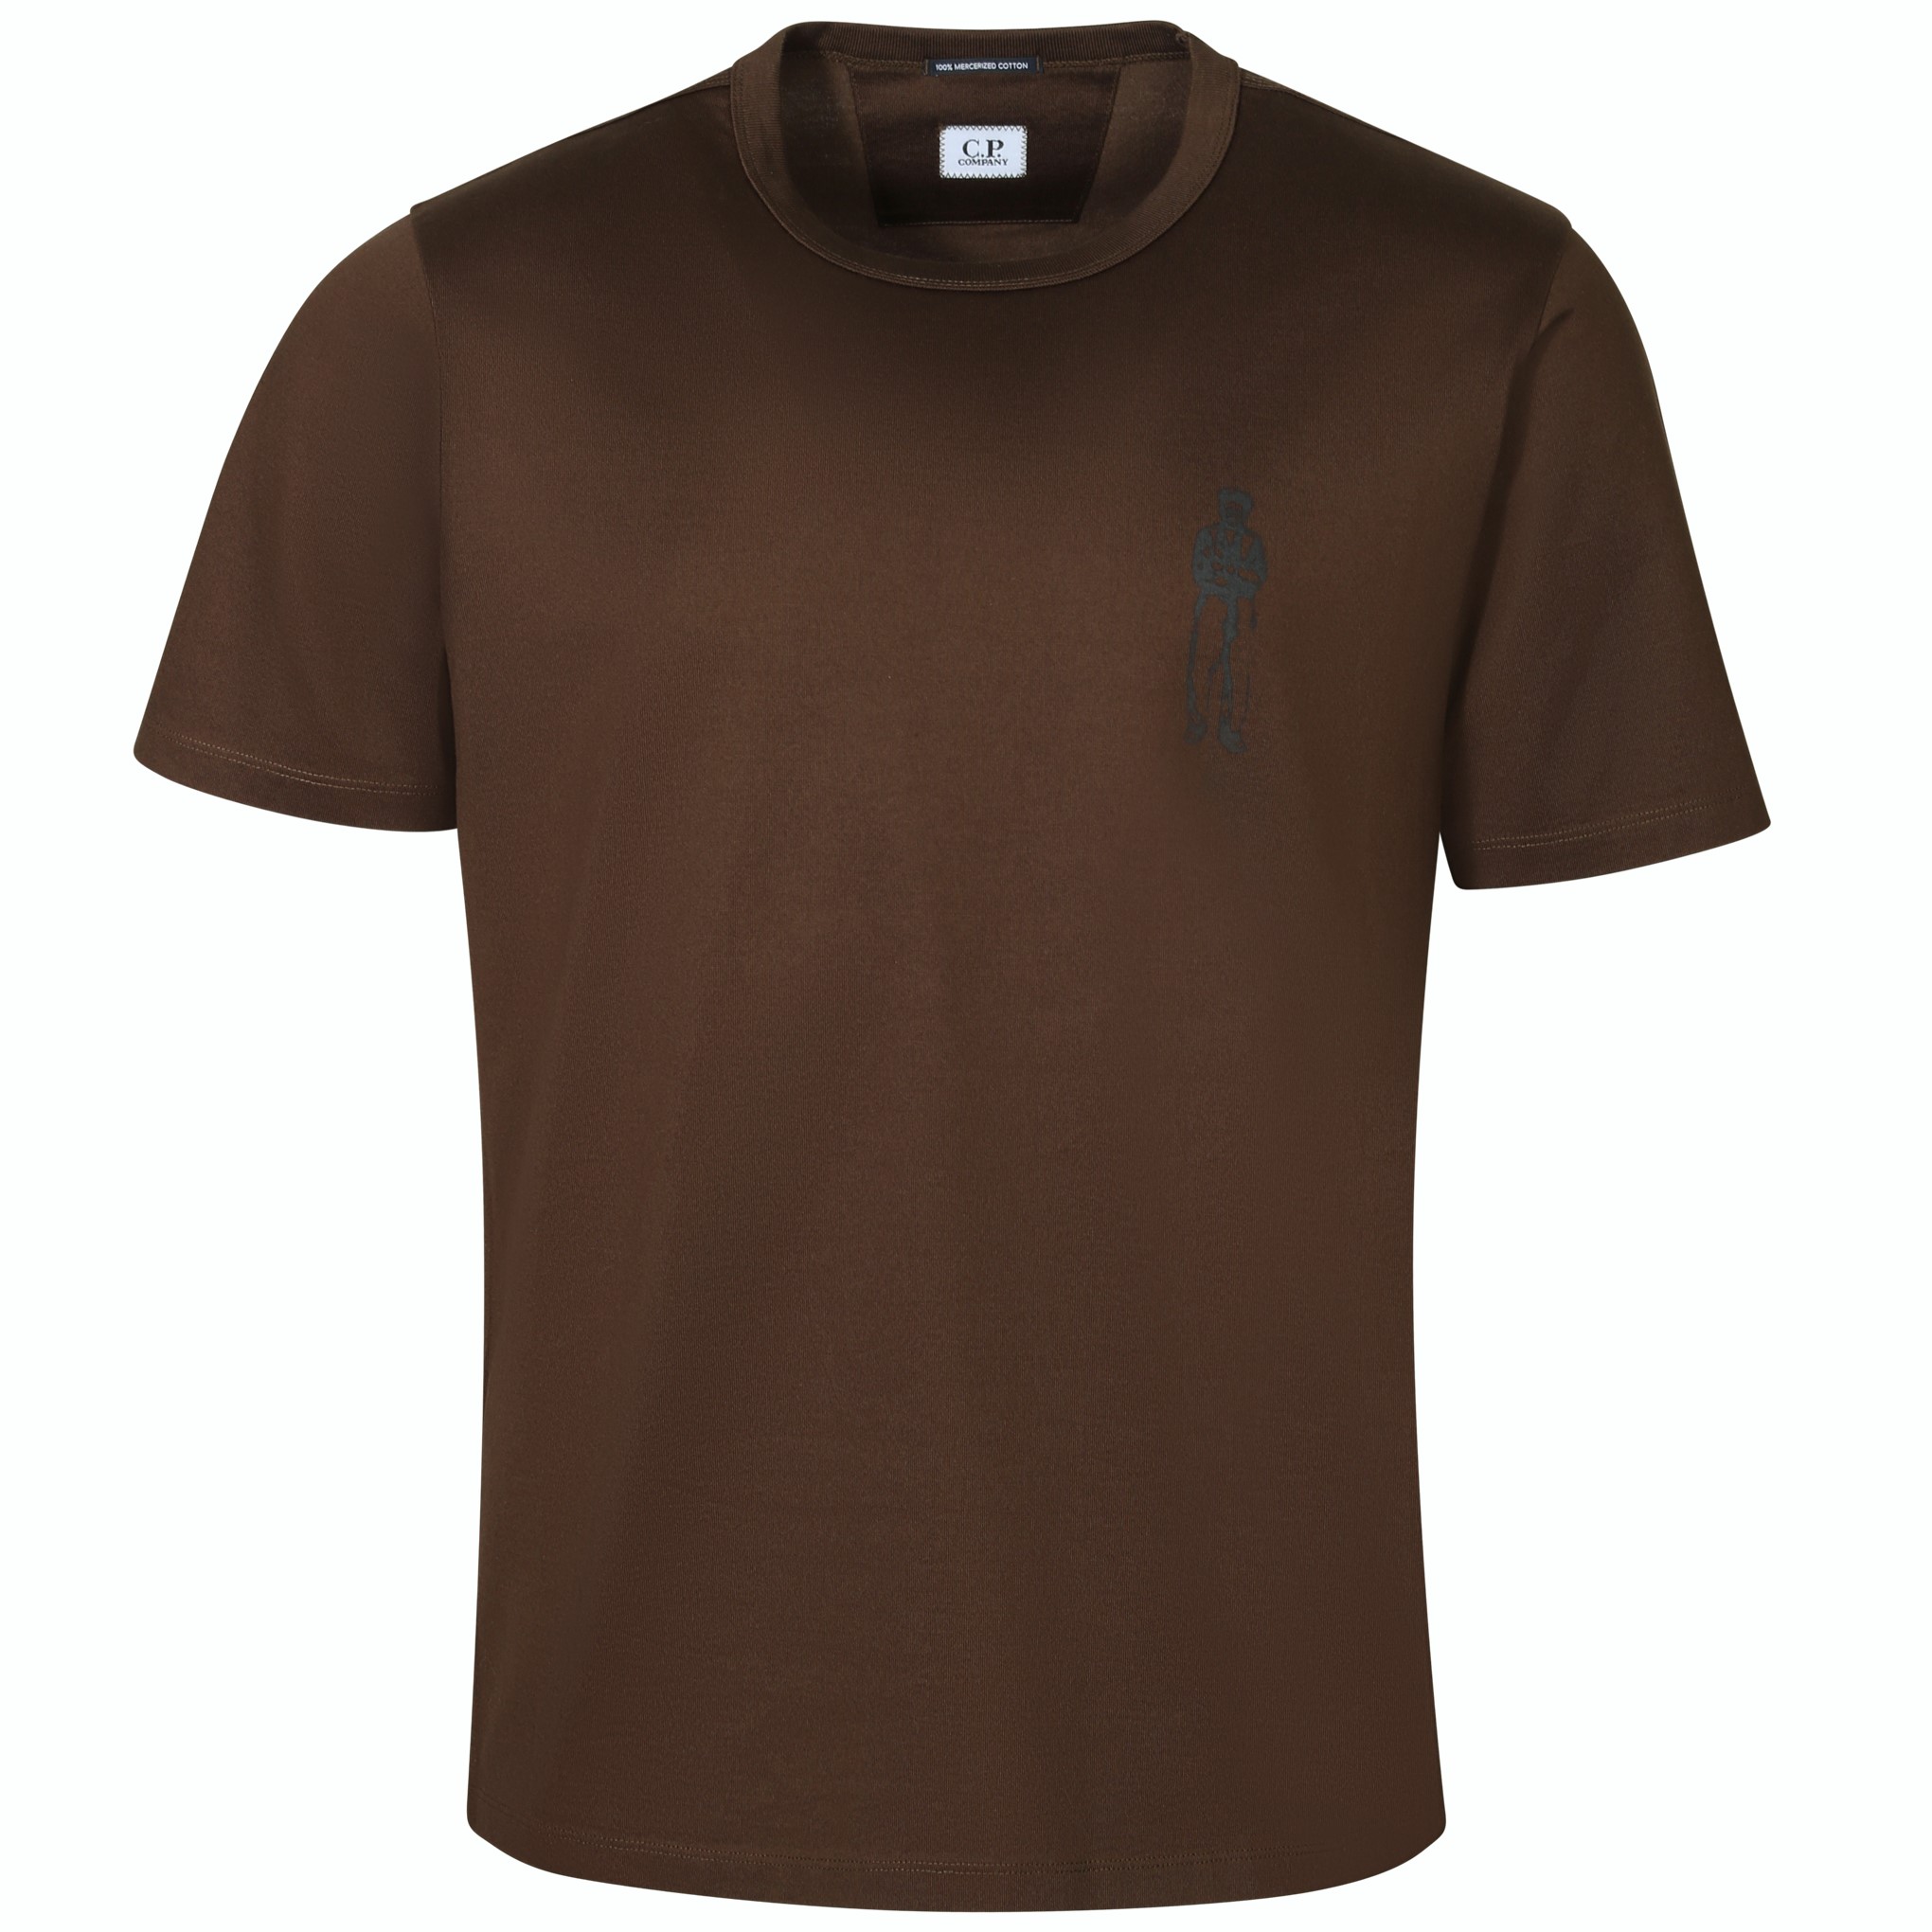 C.P. COMPANY T-Shirt in Dark Olive